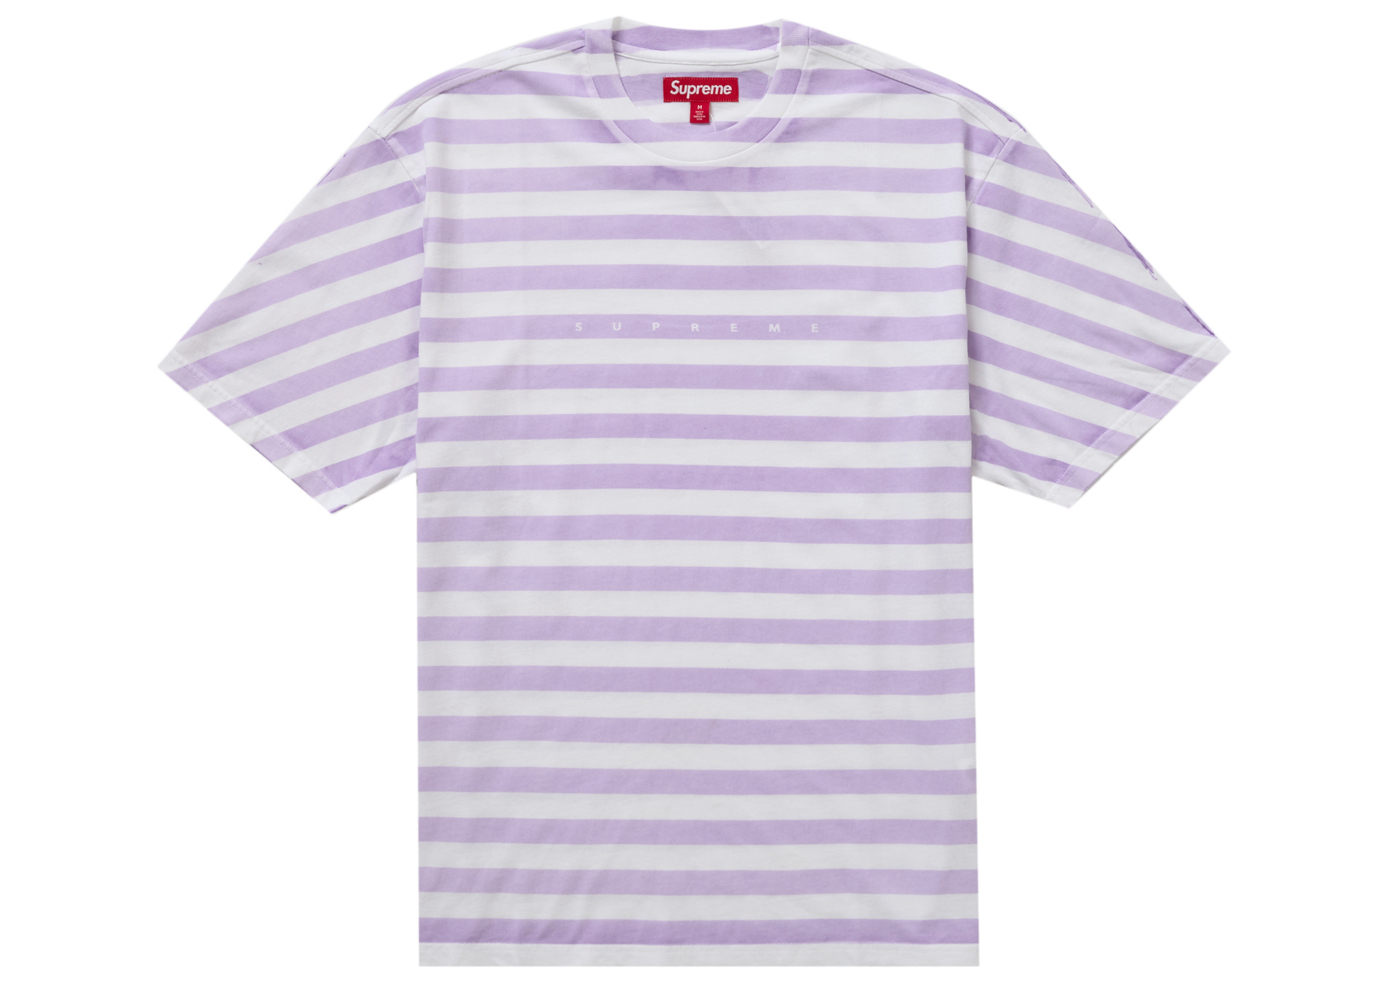 Supreme Overprint Stripe S/S Top Lavender